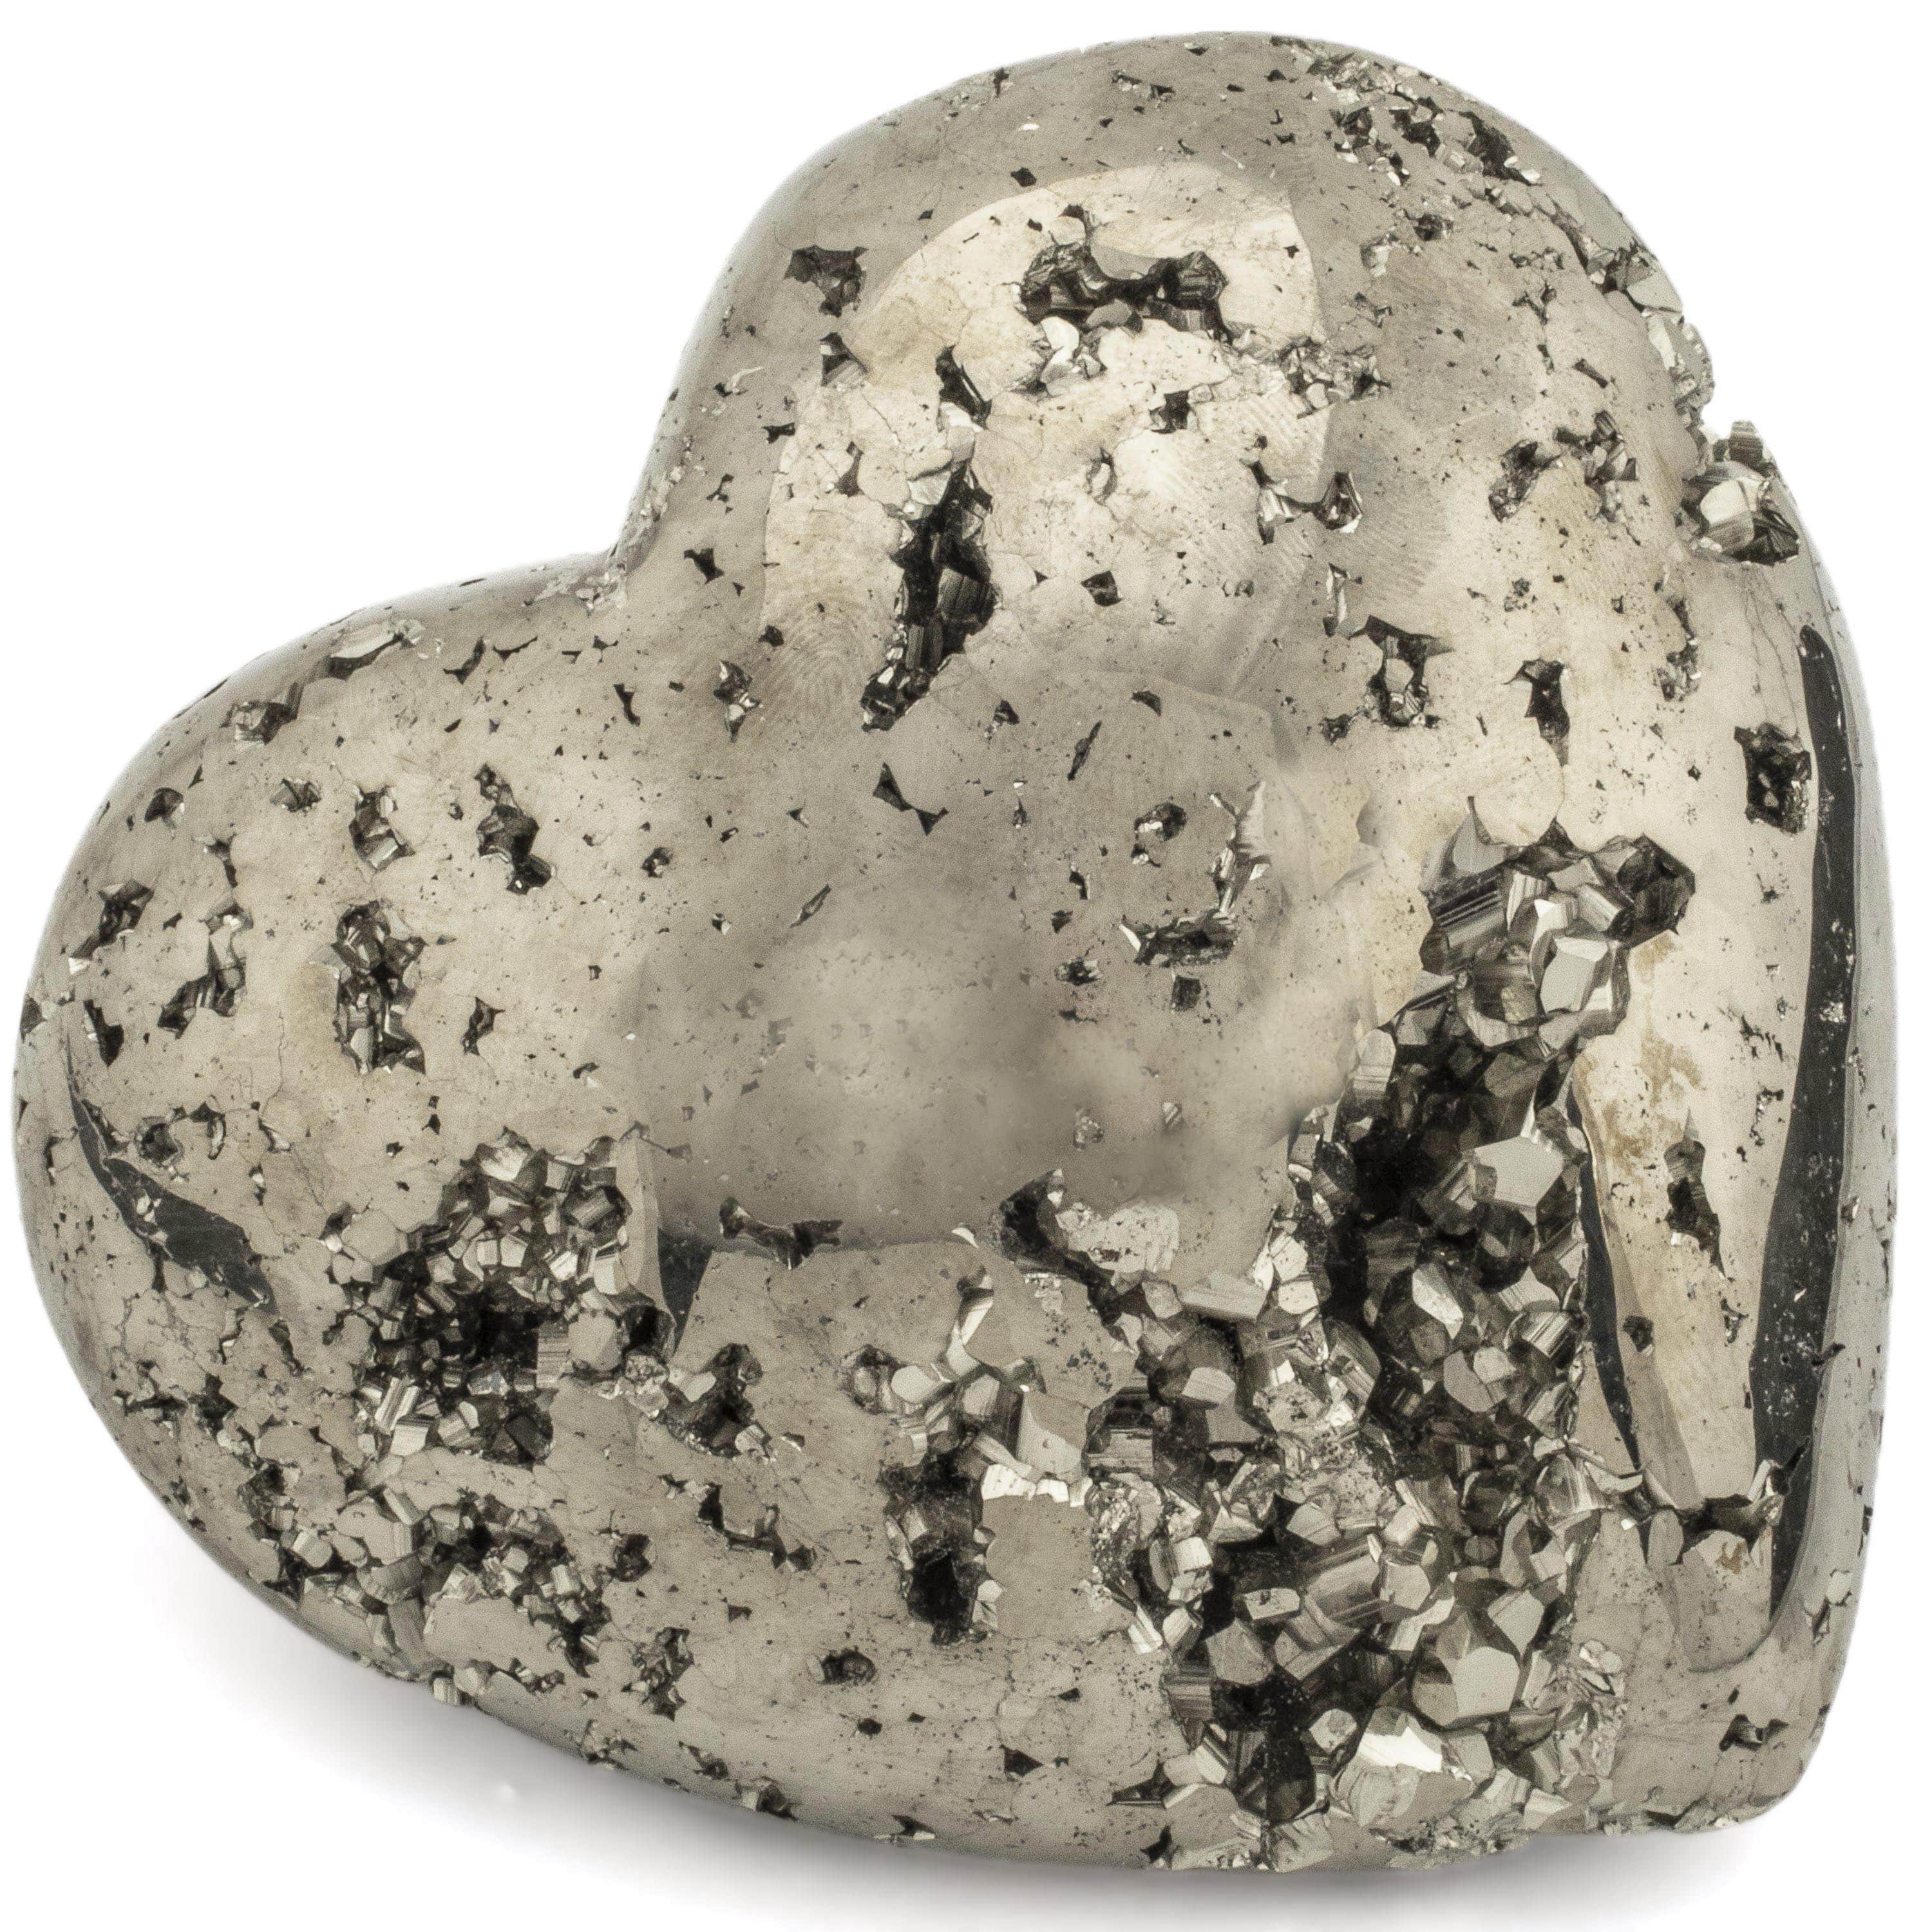 Kalifano Pyrite Pyrite Heart Carving 4.5" / 1,160 grams GH1200-PC.005